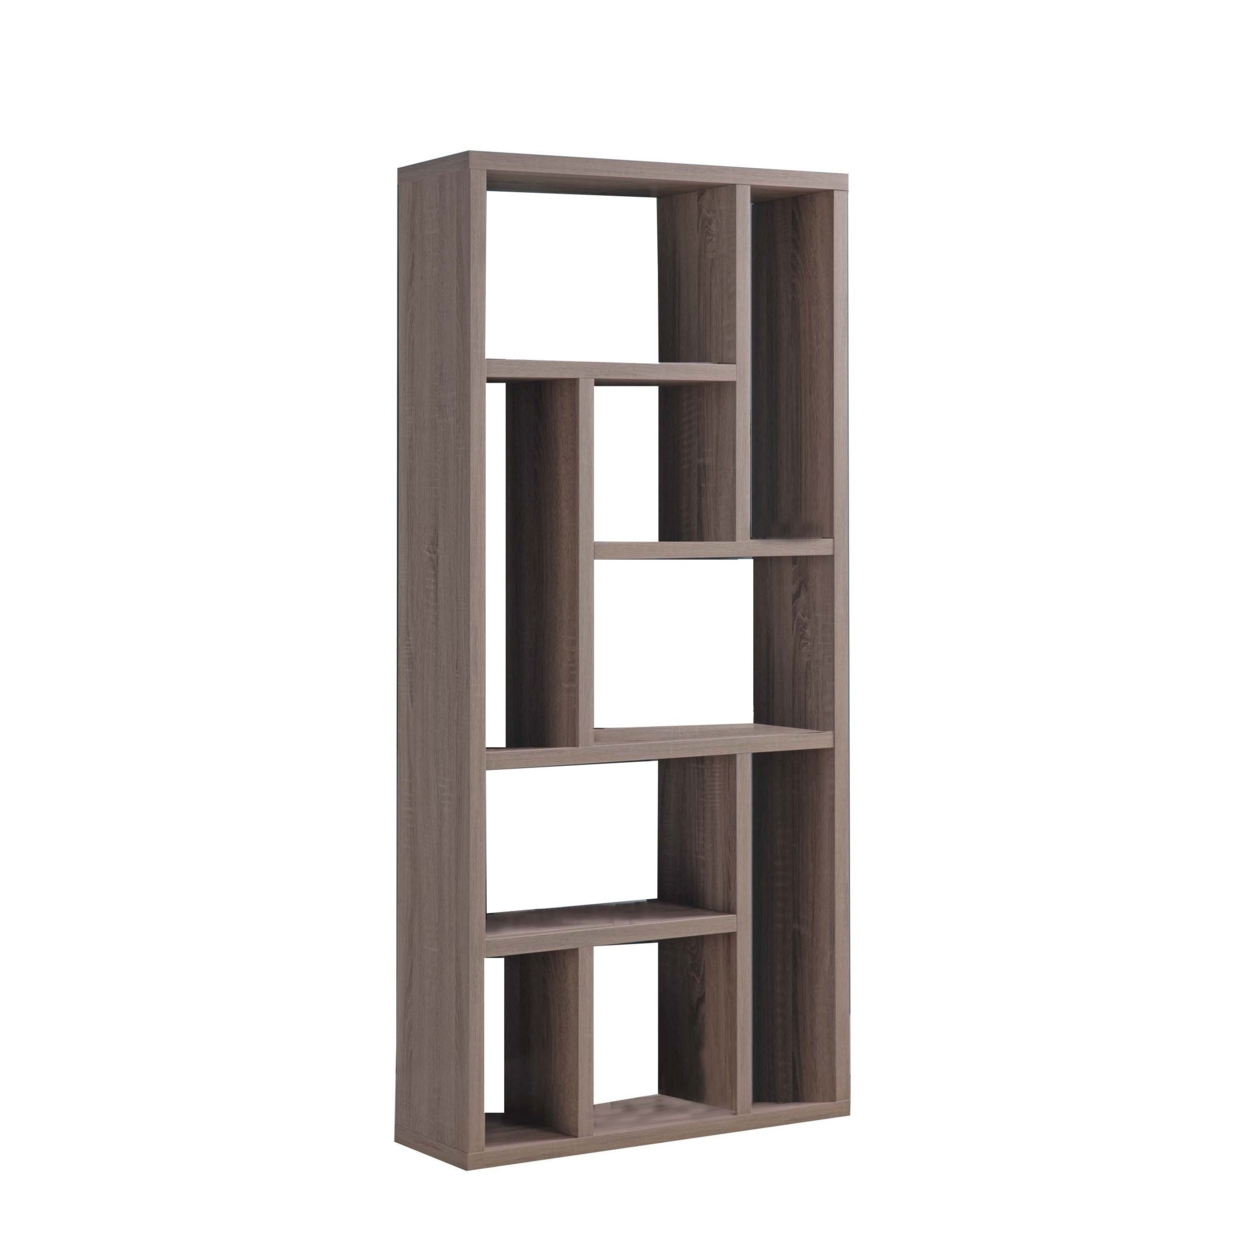 Asa 71 Inch Modern Display Bookshelf With 9 Multi Level Shelves, Dark Taupe- Saltoro Sherpi